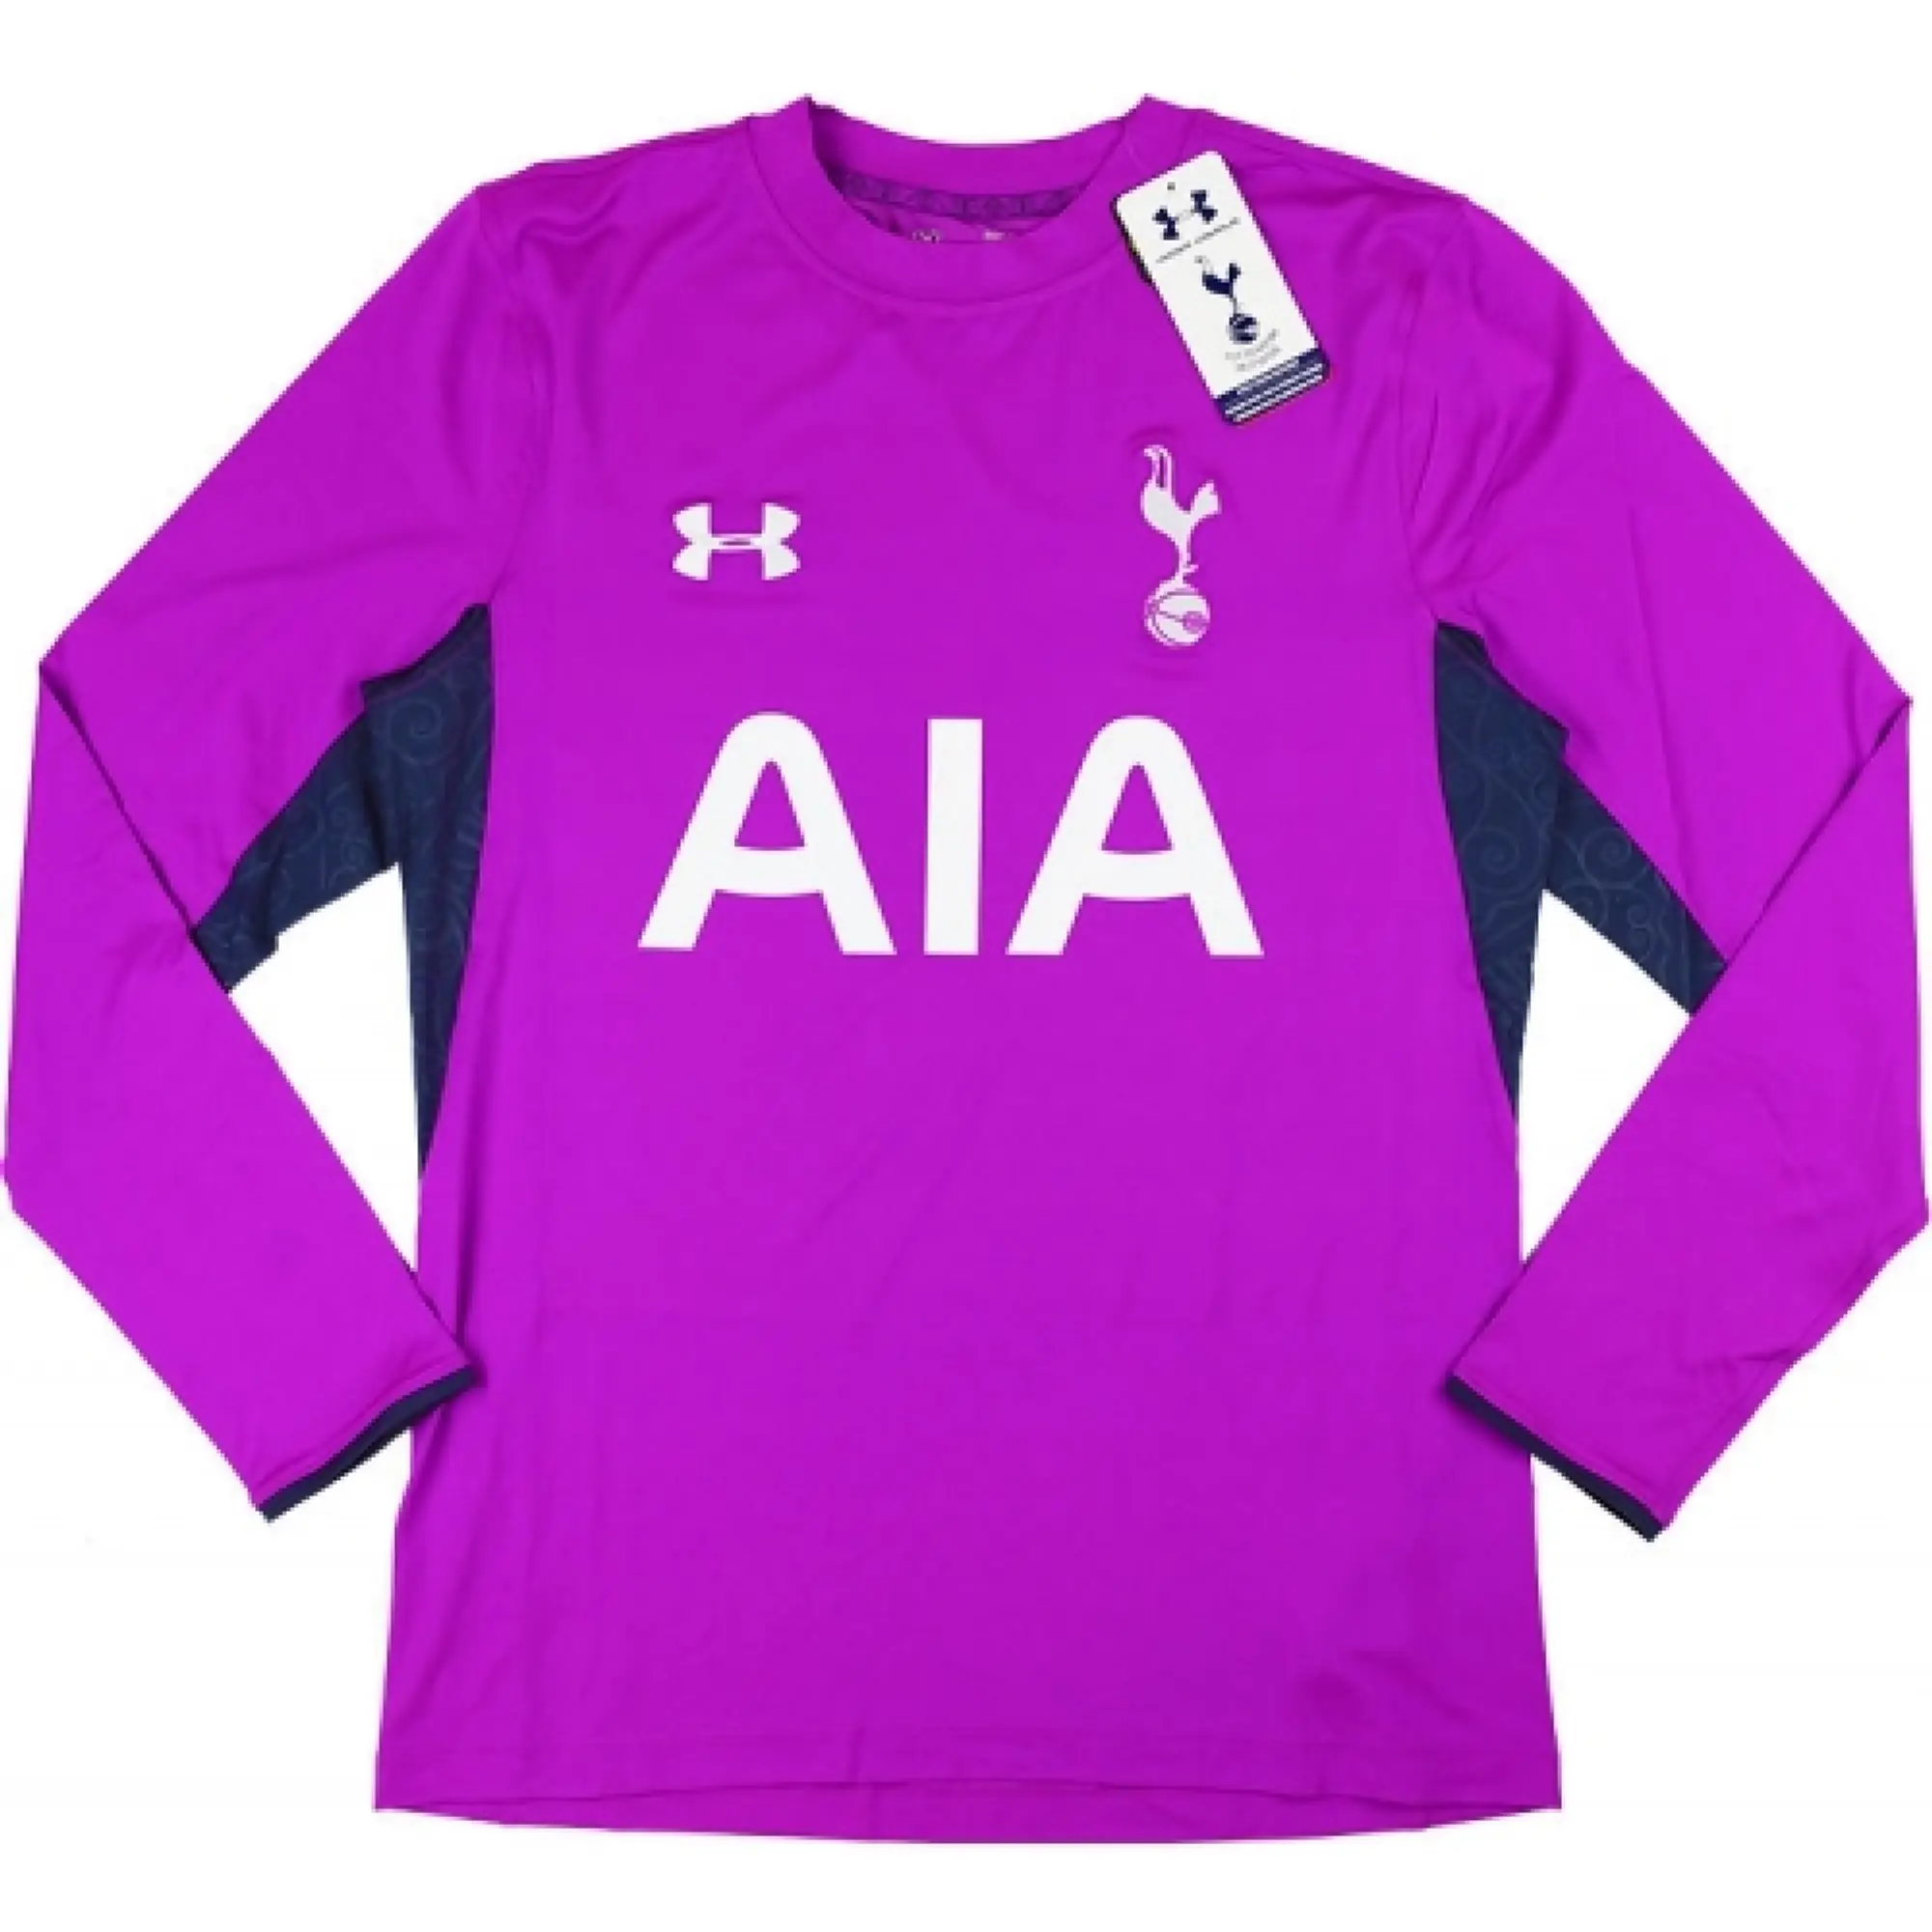 Tottenham Hotspur 2014-15 Kits - Footy Headlines